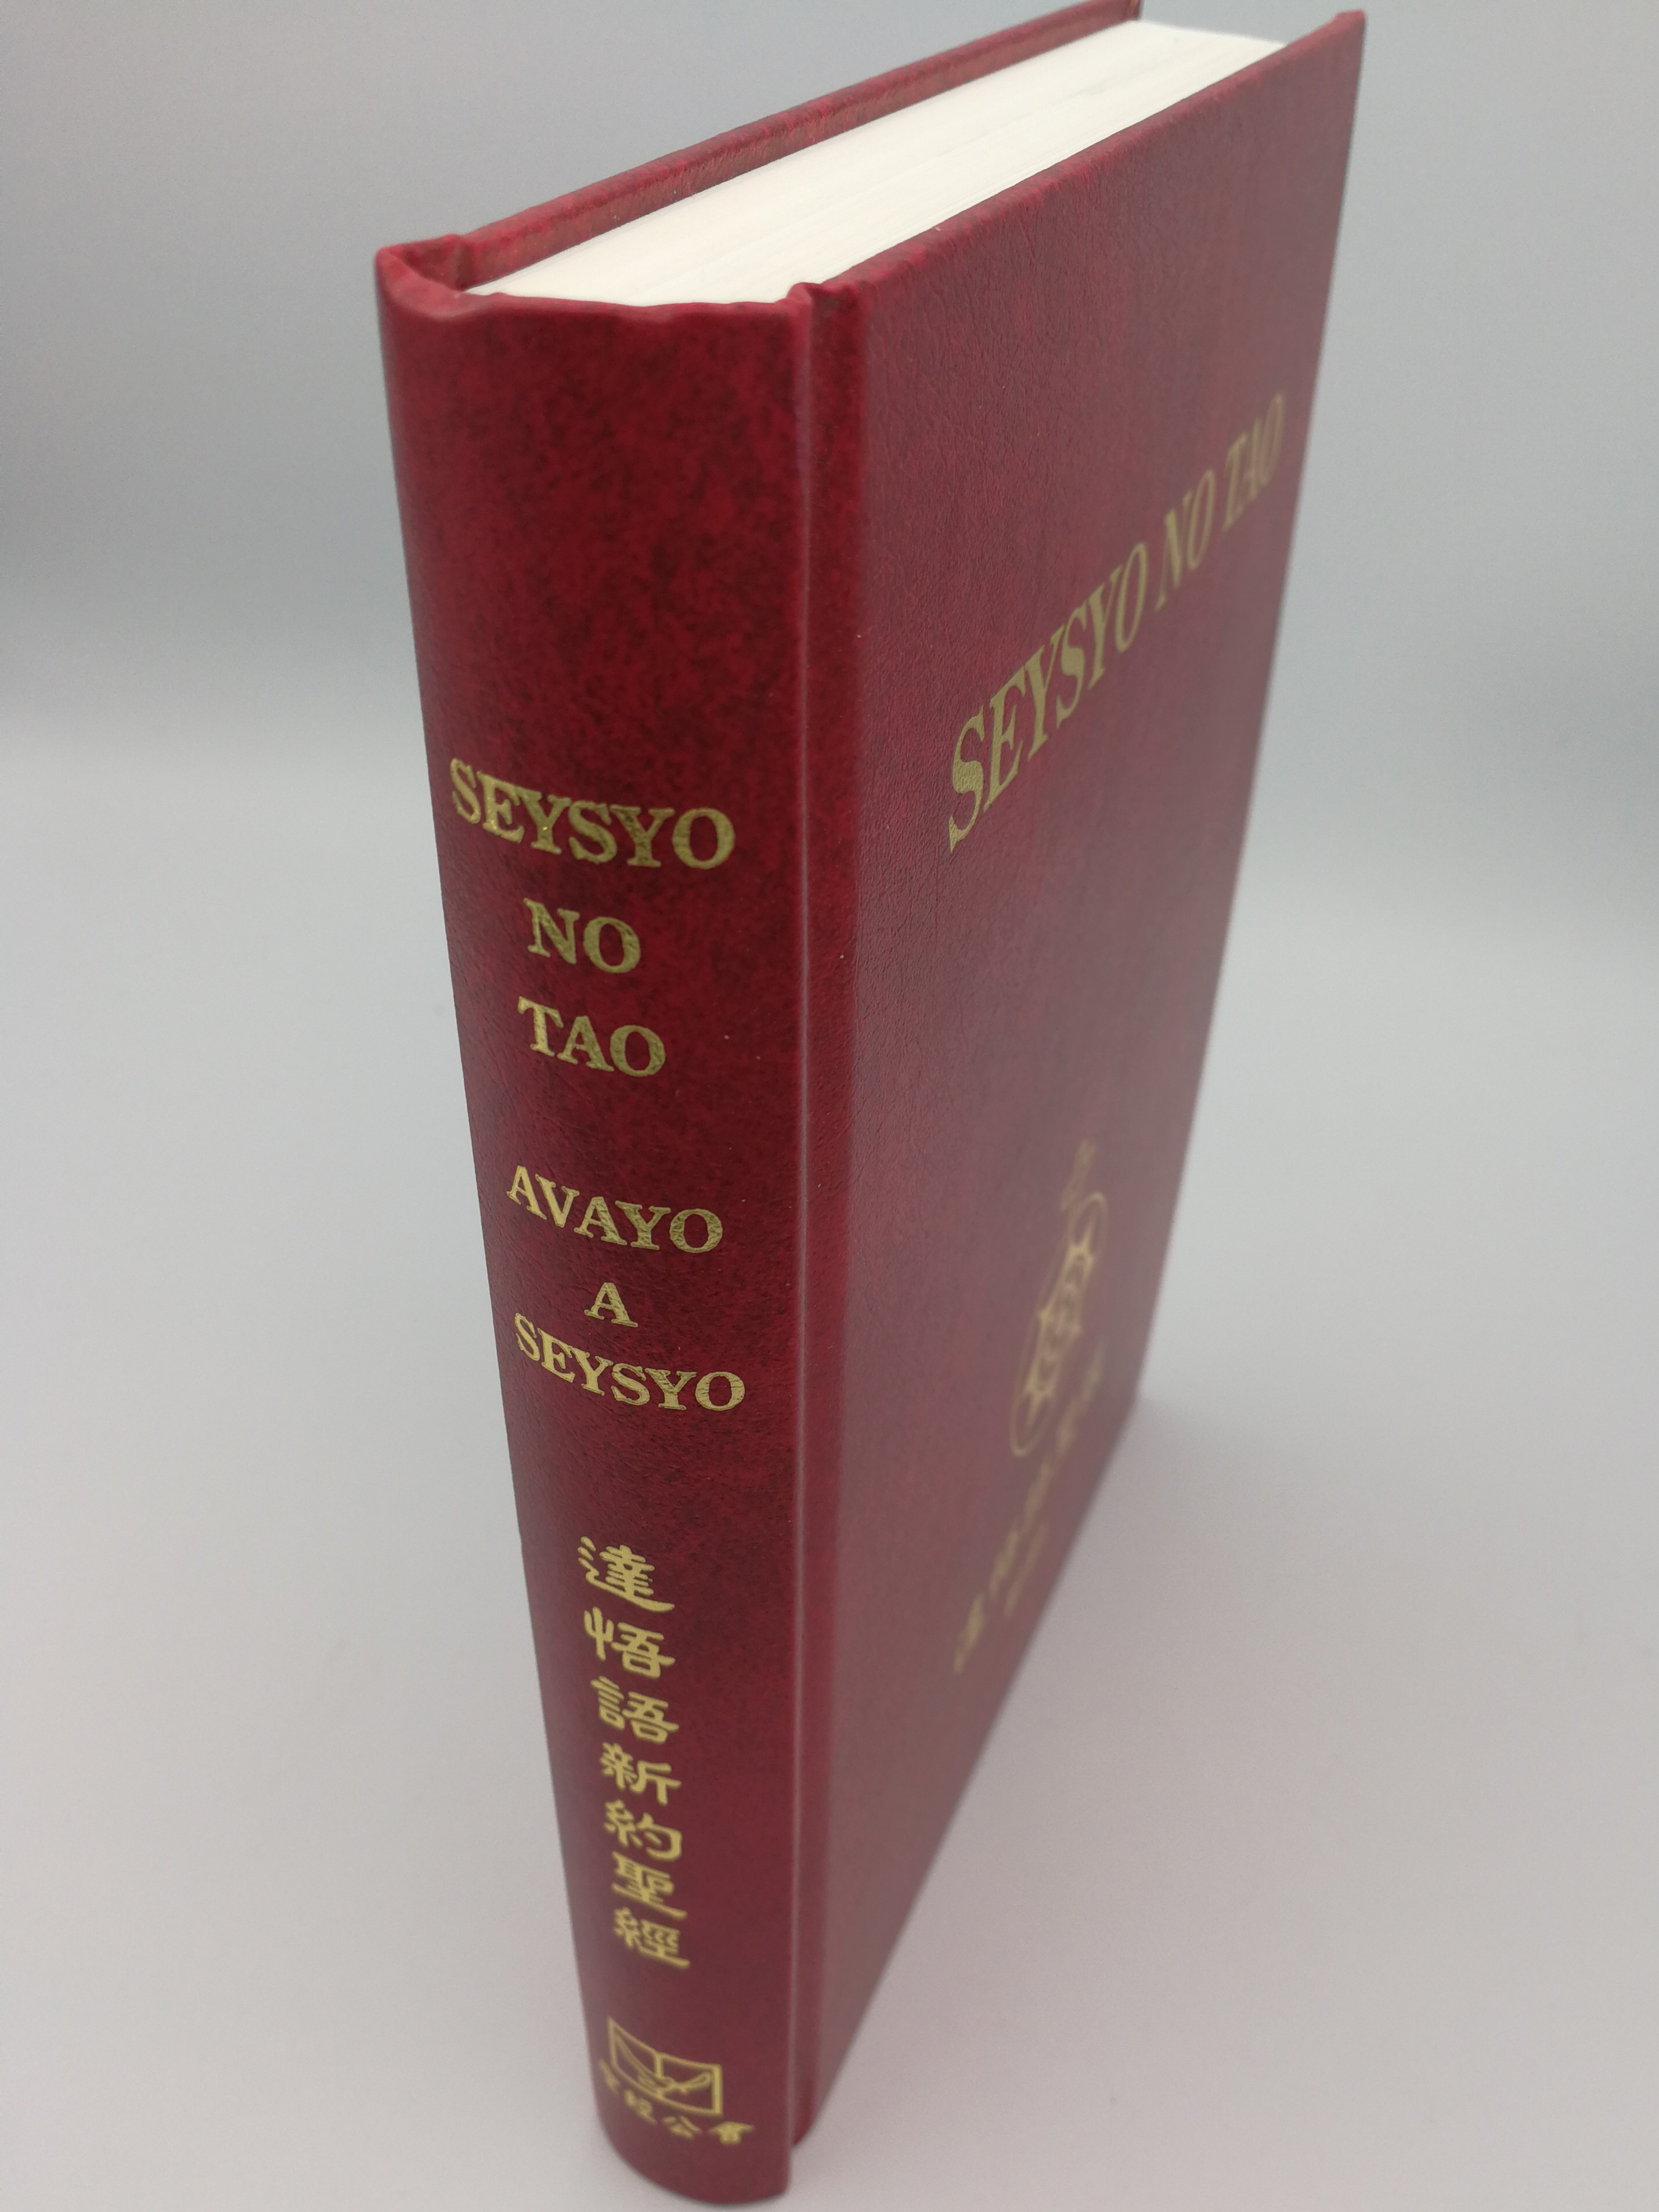 tao-language-new-testament-3.jpg